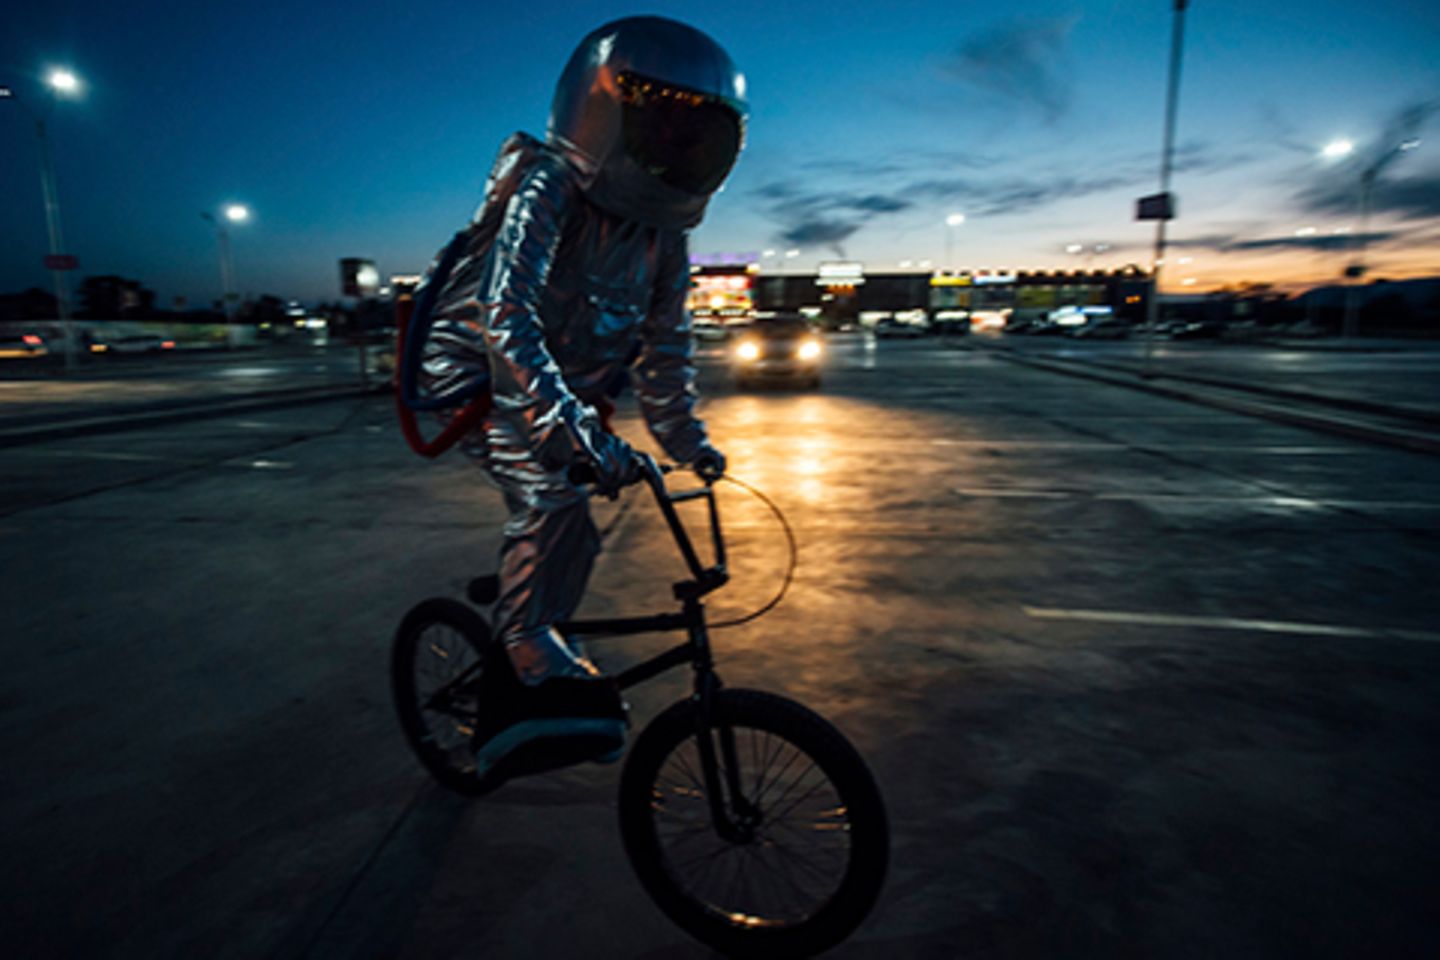 BMX rider with AR helmet on night road.